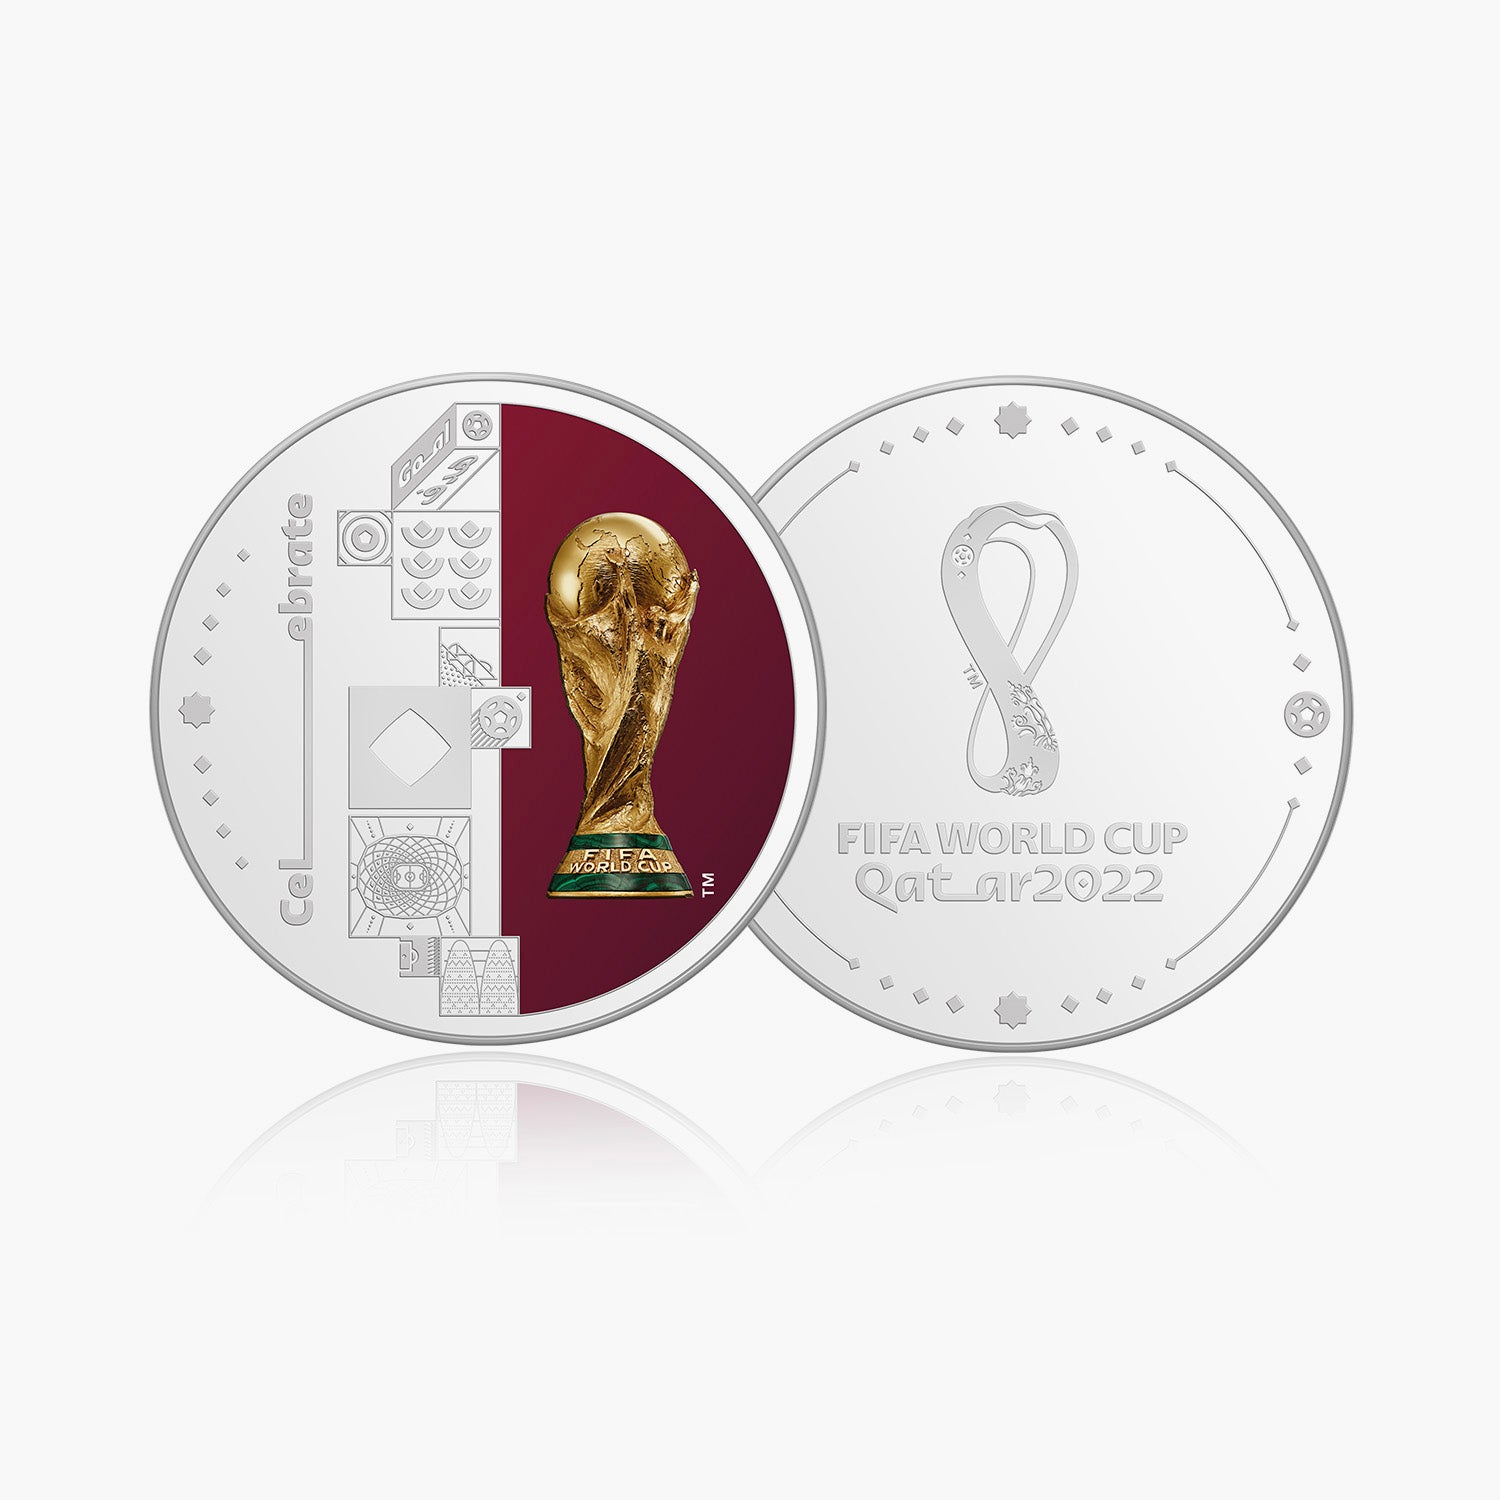 FIFA World Cup 2022‚Ñ¢ 44mm Commemorative